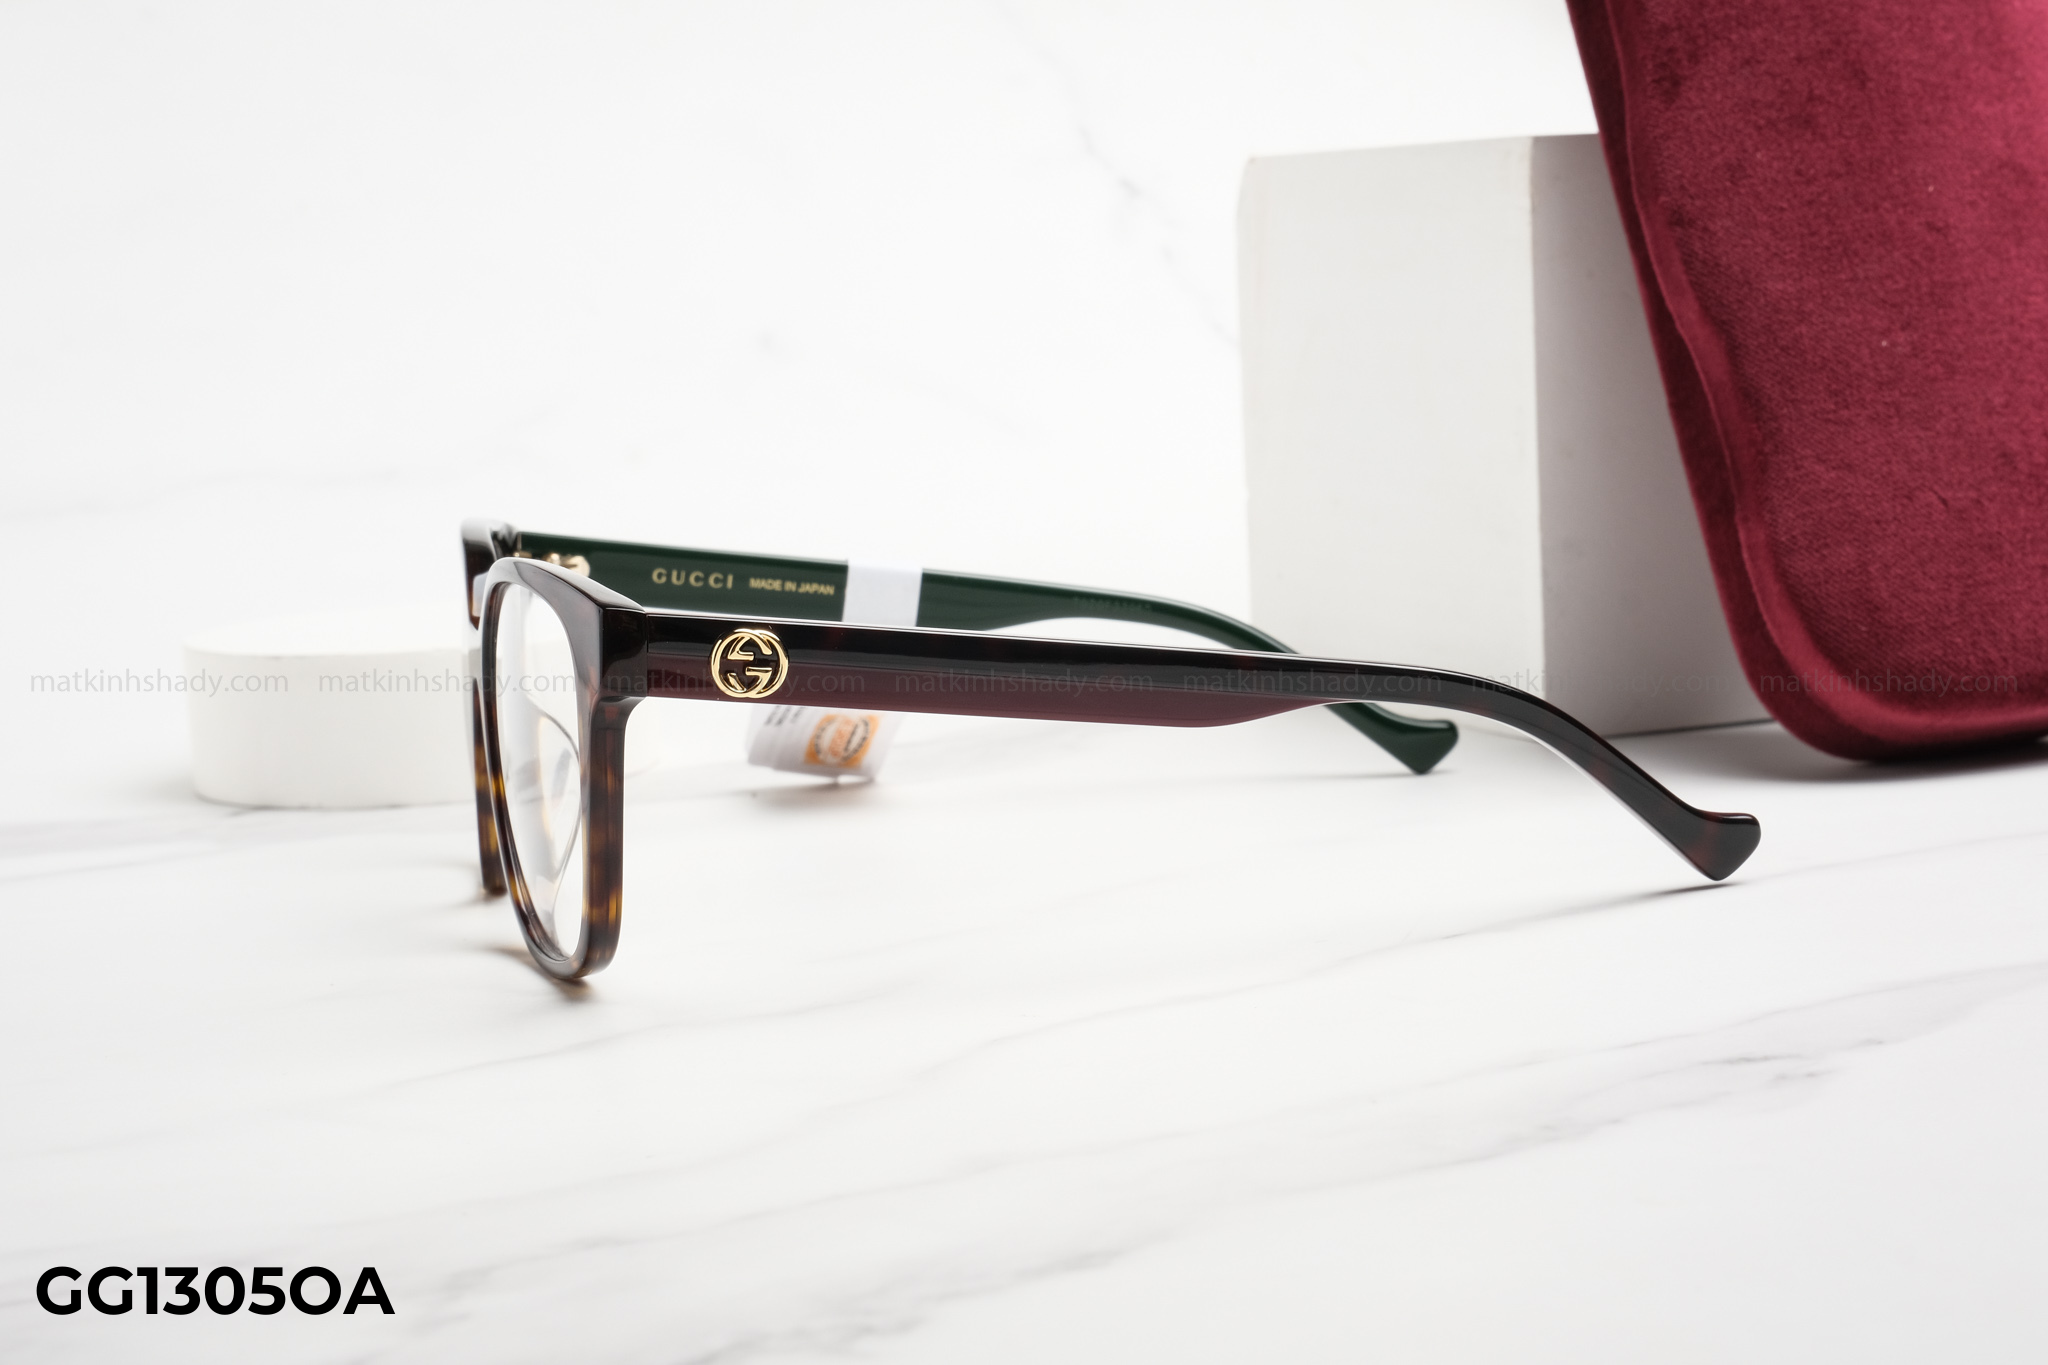  Gucci Eyewear - Glasses - GG1305OA 